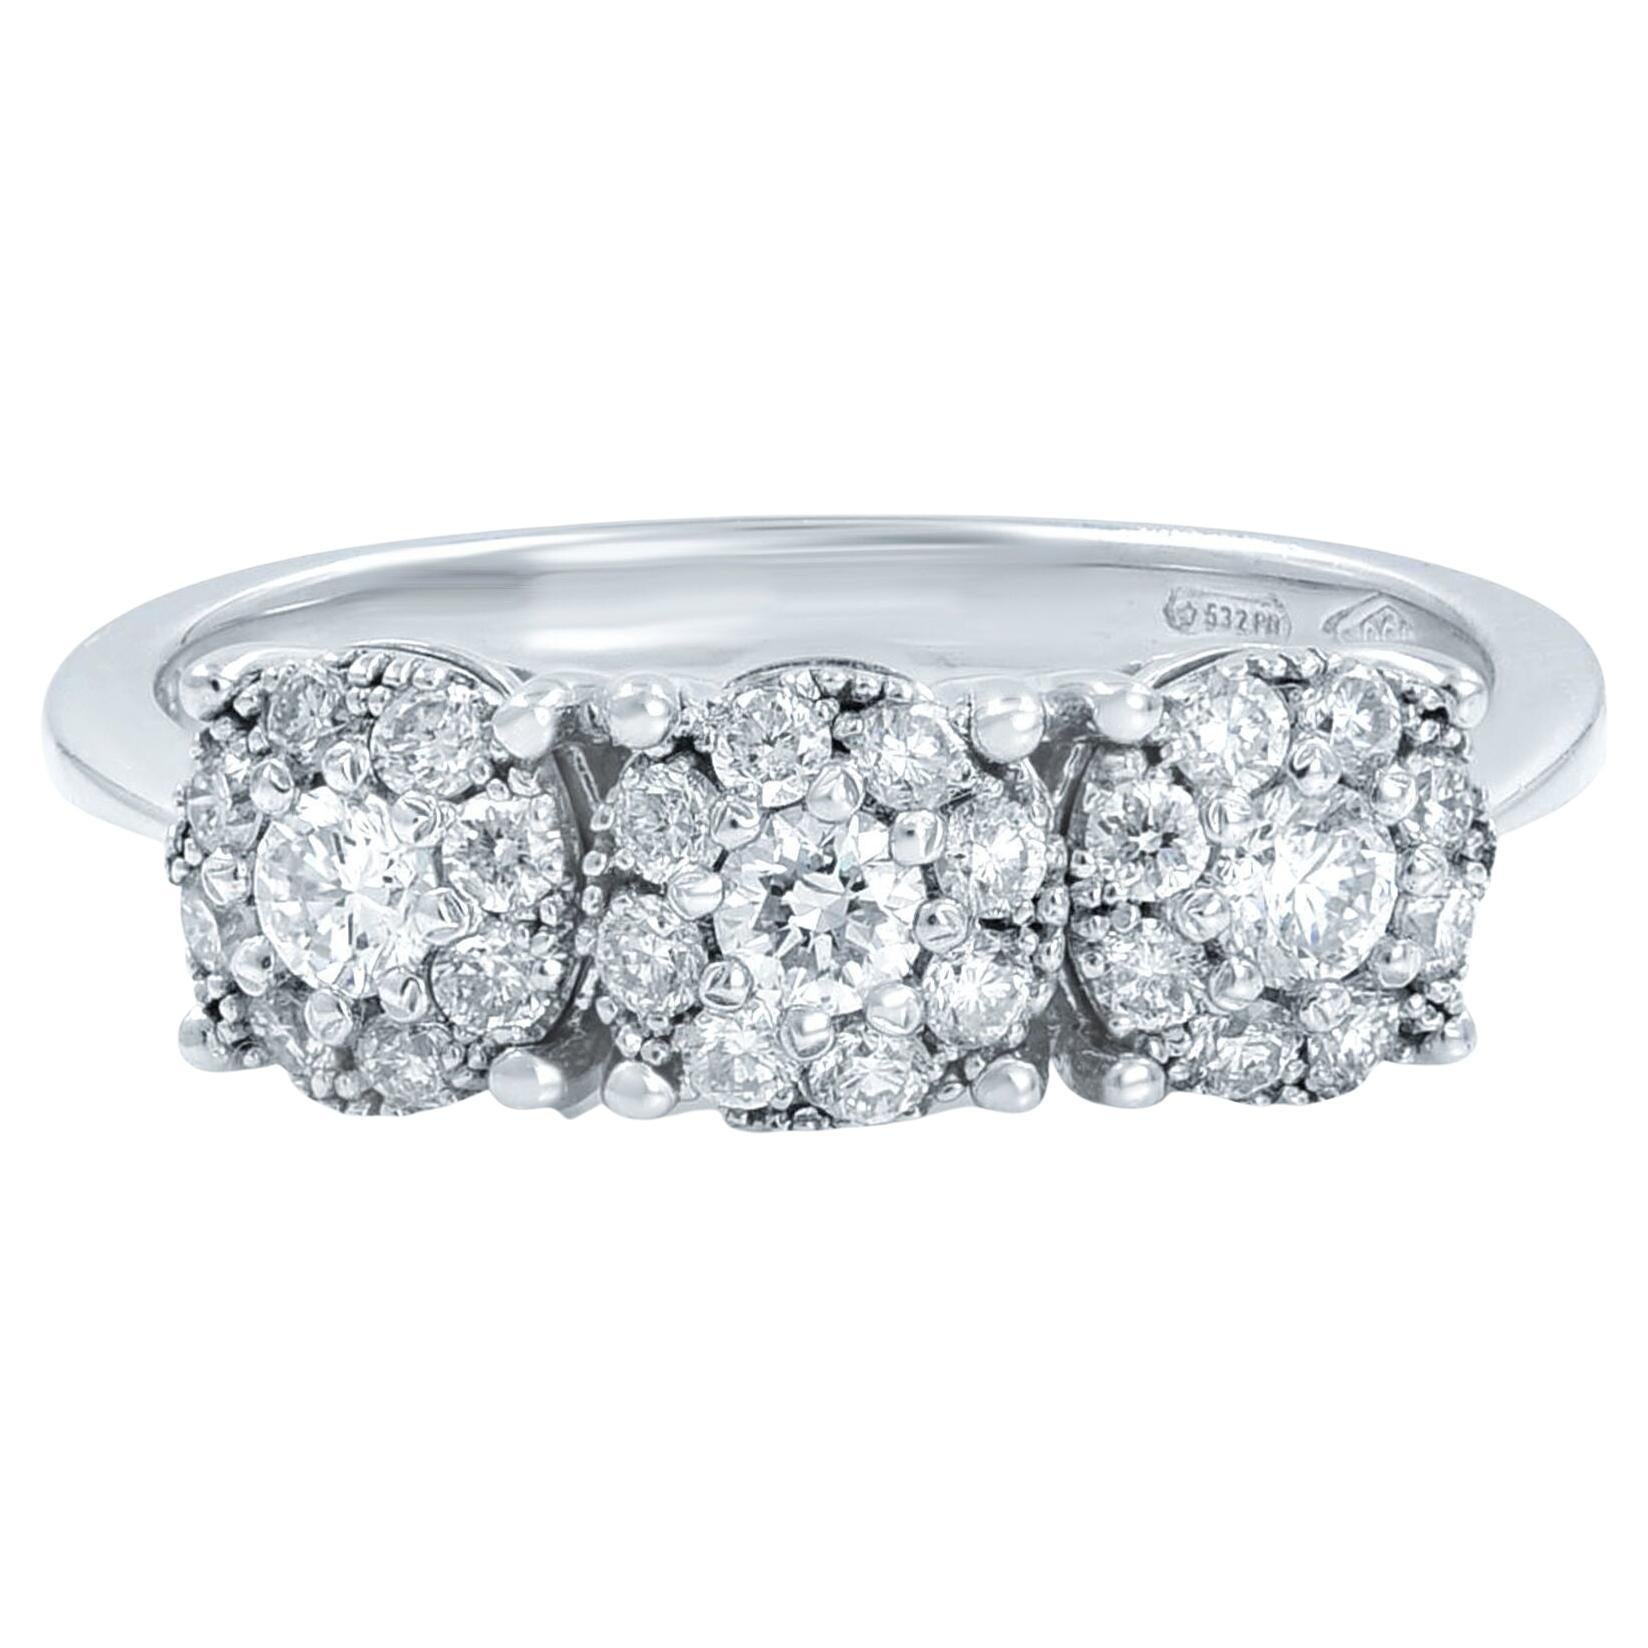 Rachel Koen Three Round Cluster Diamond Engagement Ring 18K White Gold 0.75cttw